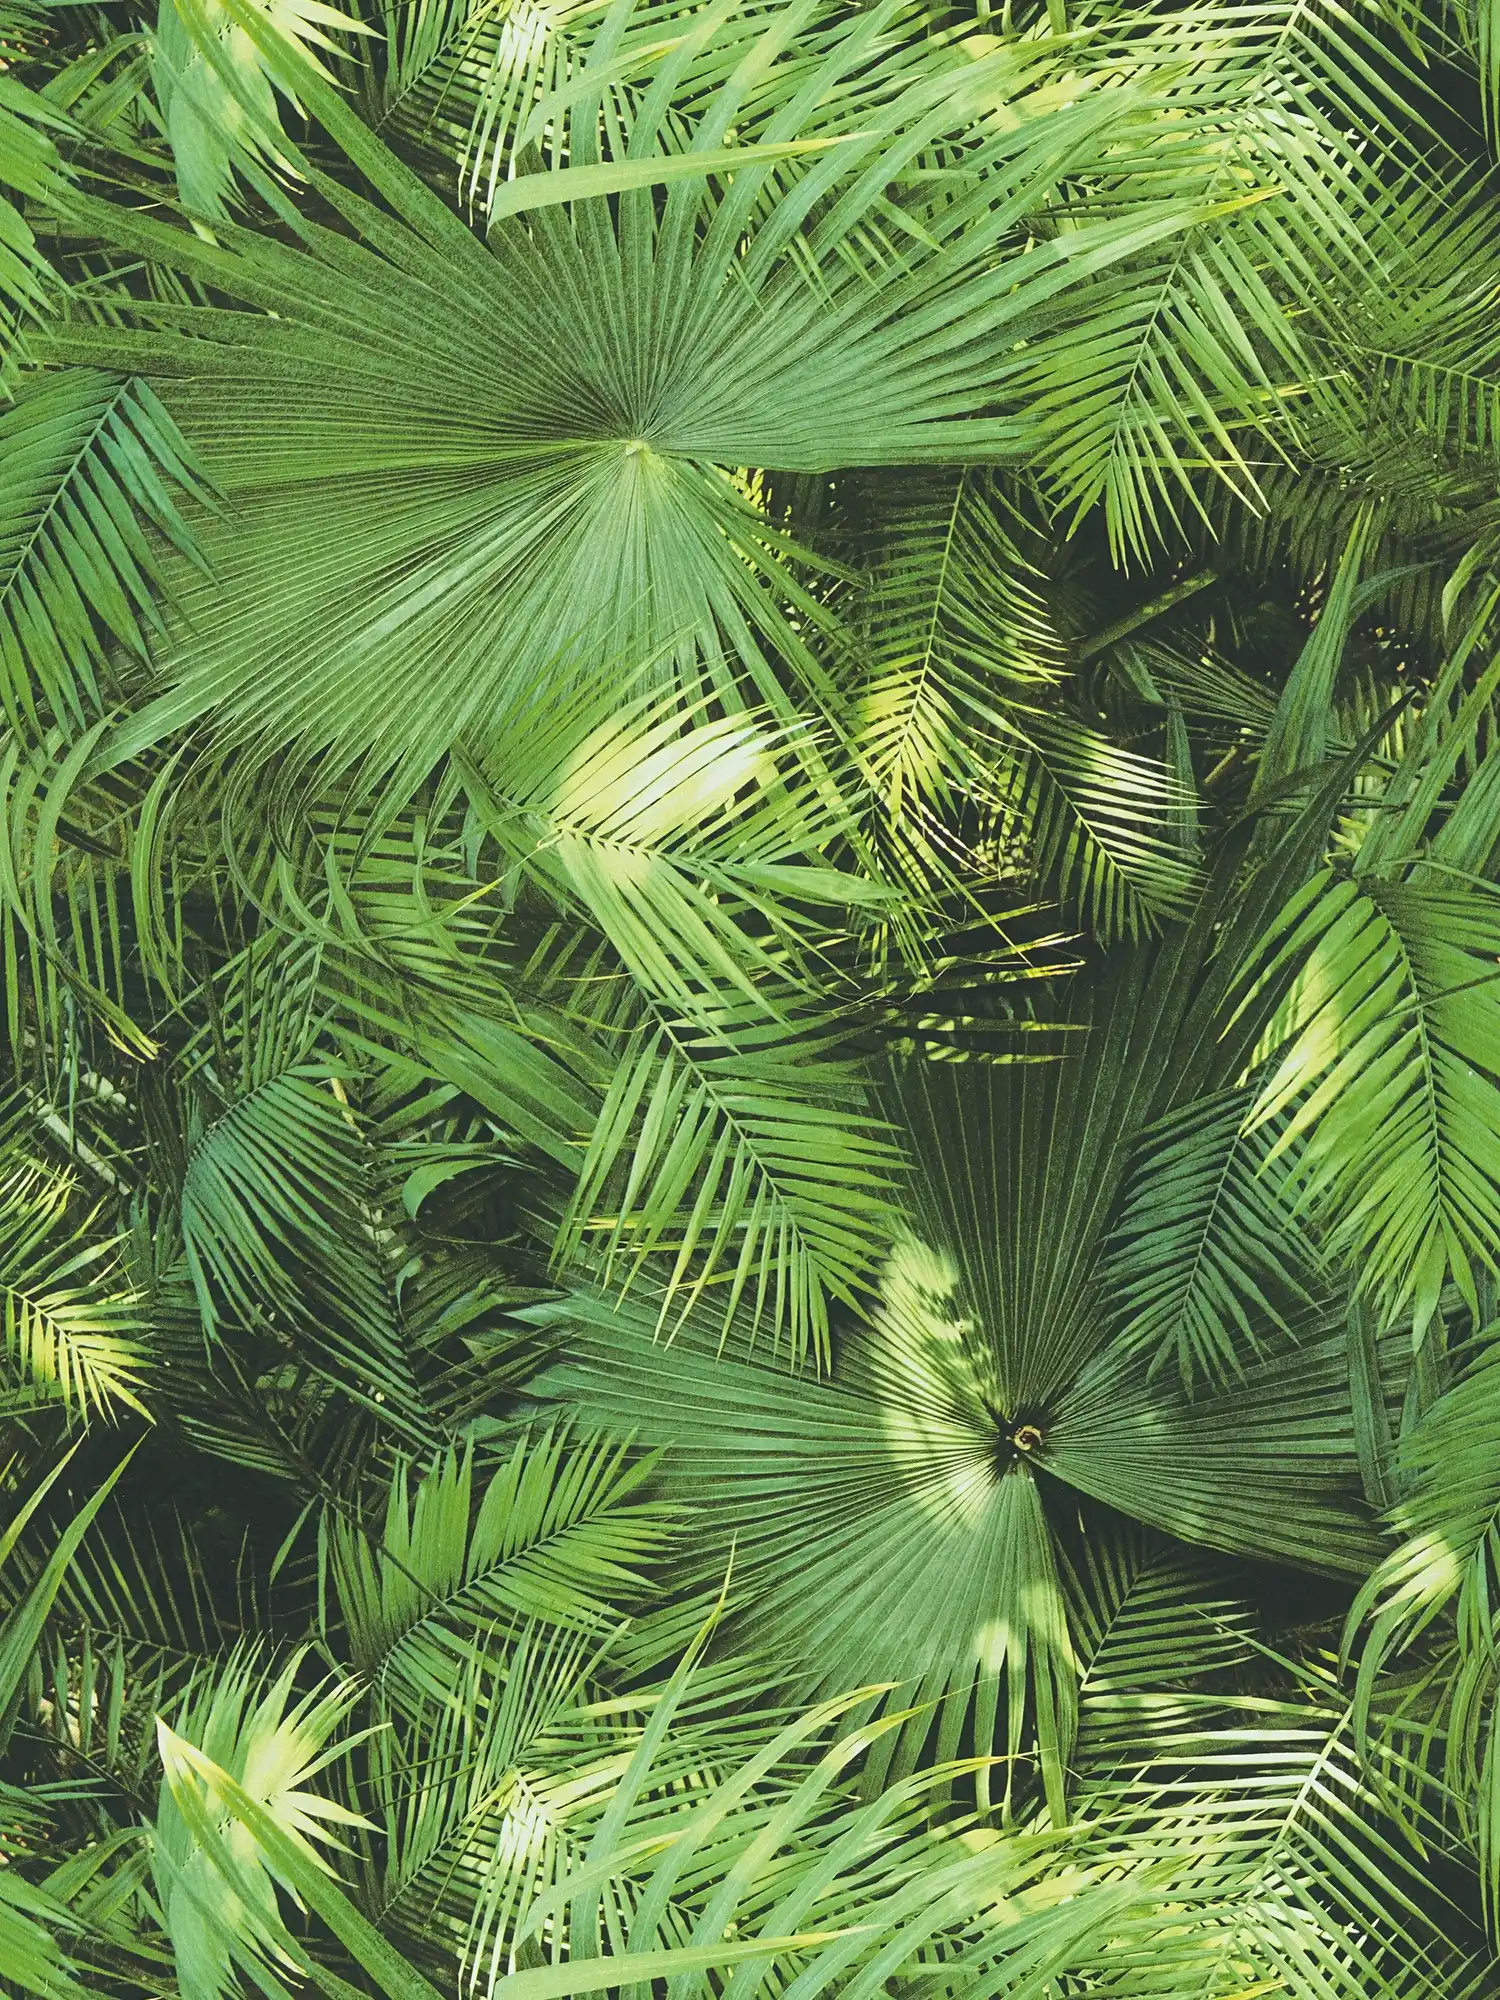 Self-adhesive wallpaper | jungle leaves pattern green jungle
